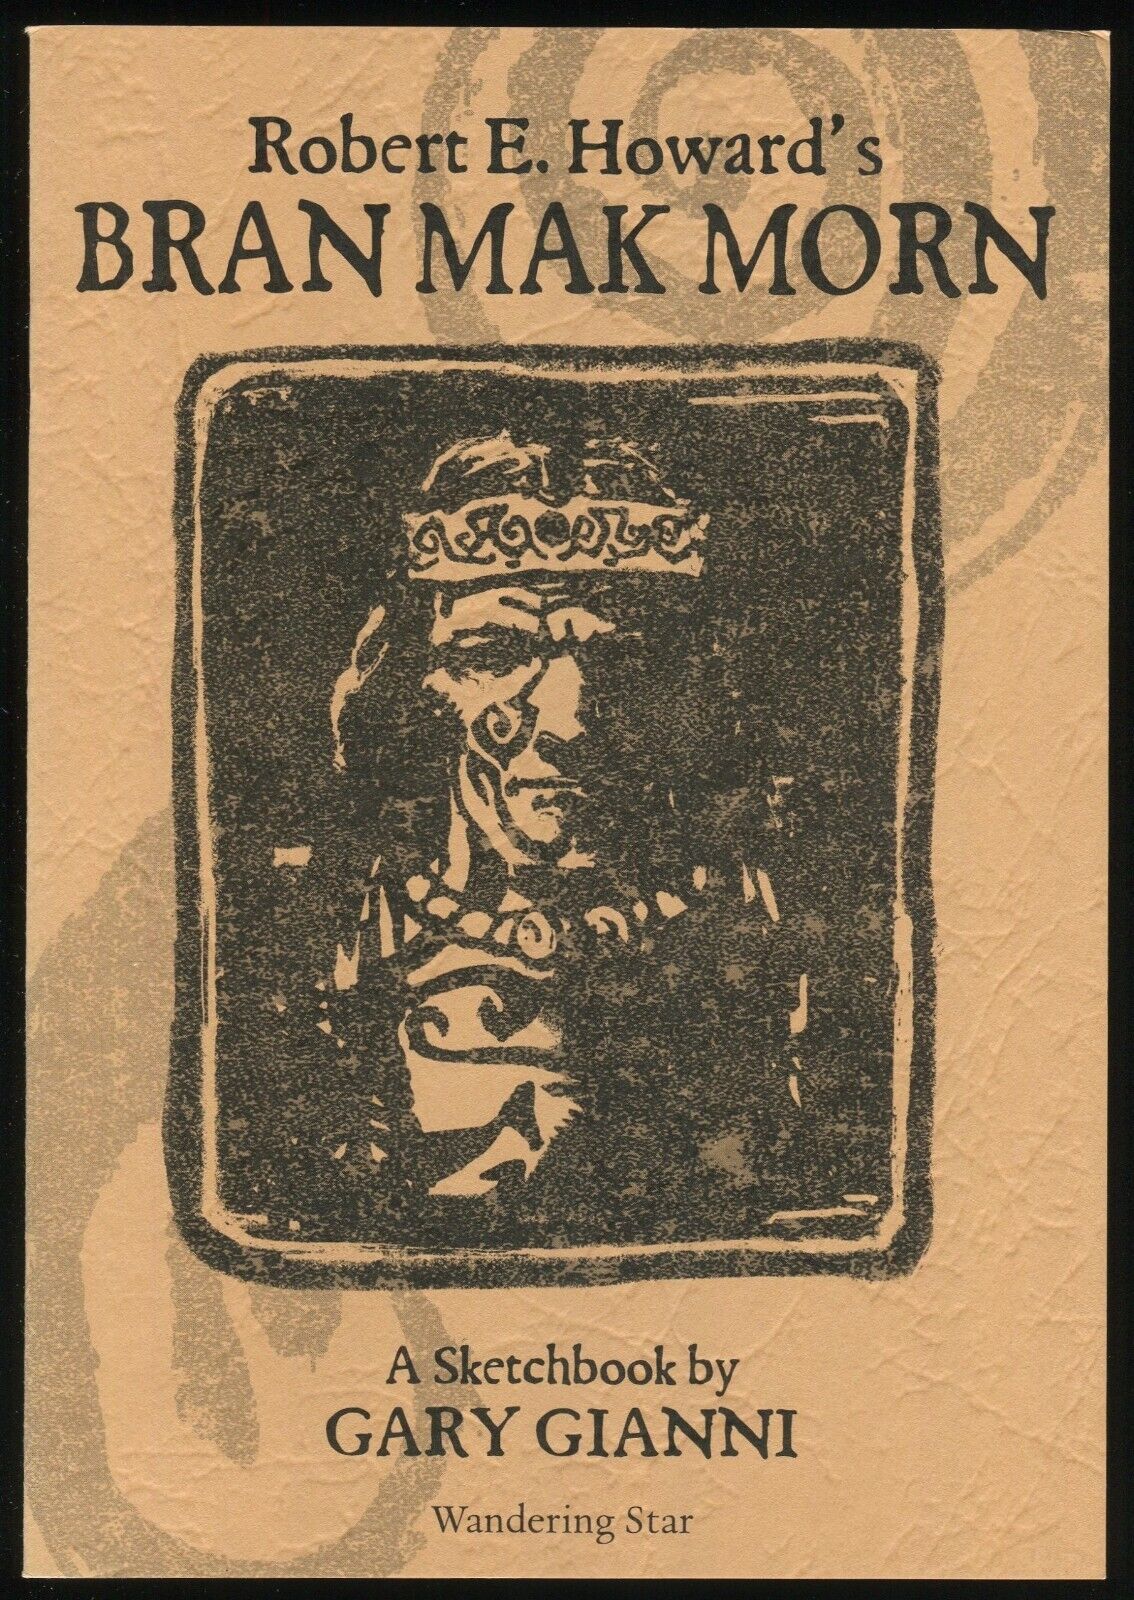 Robert E Howards Bran Mak Morn Limited Sketchbook by Gary Gianni Wandering Star